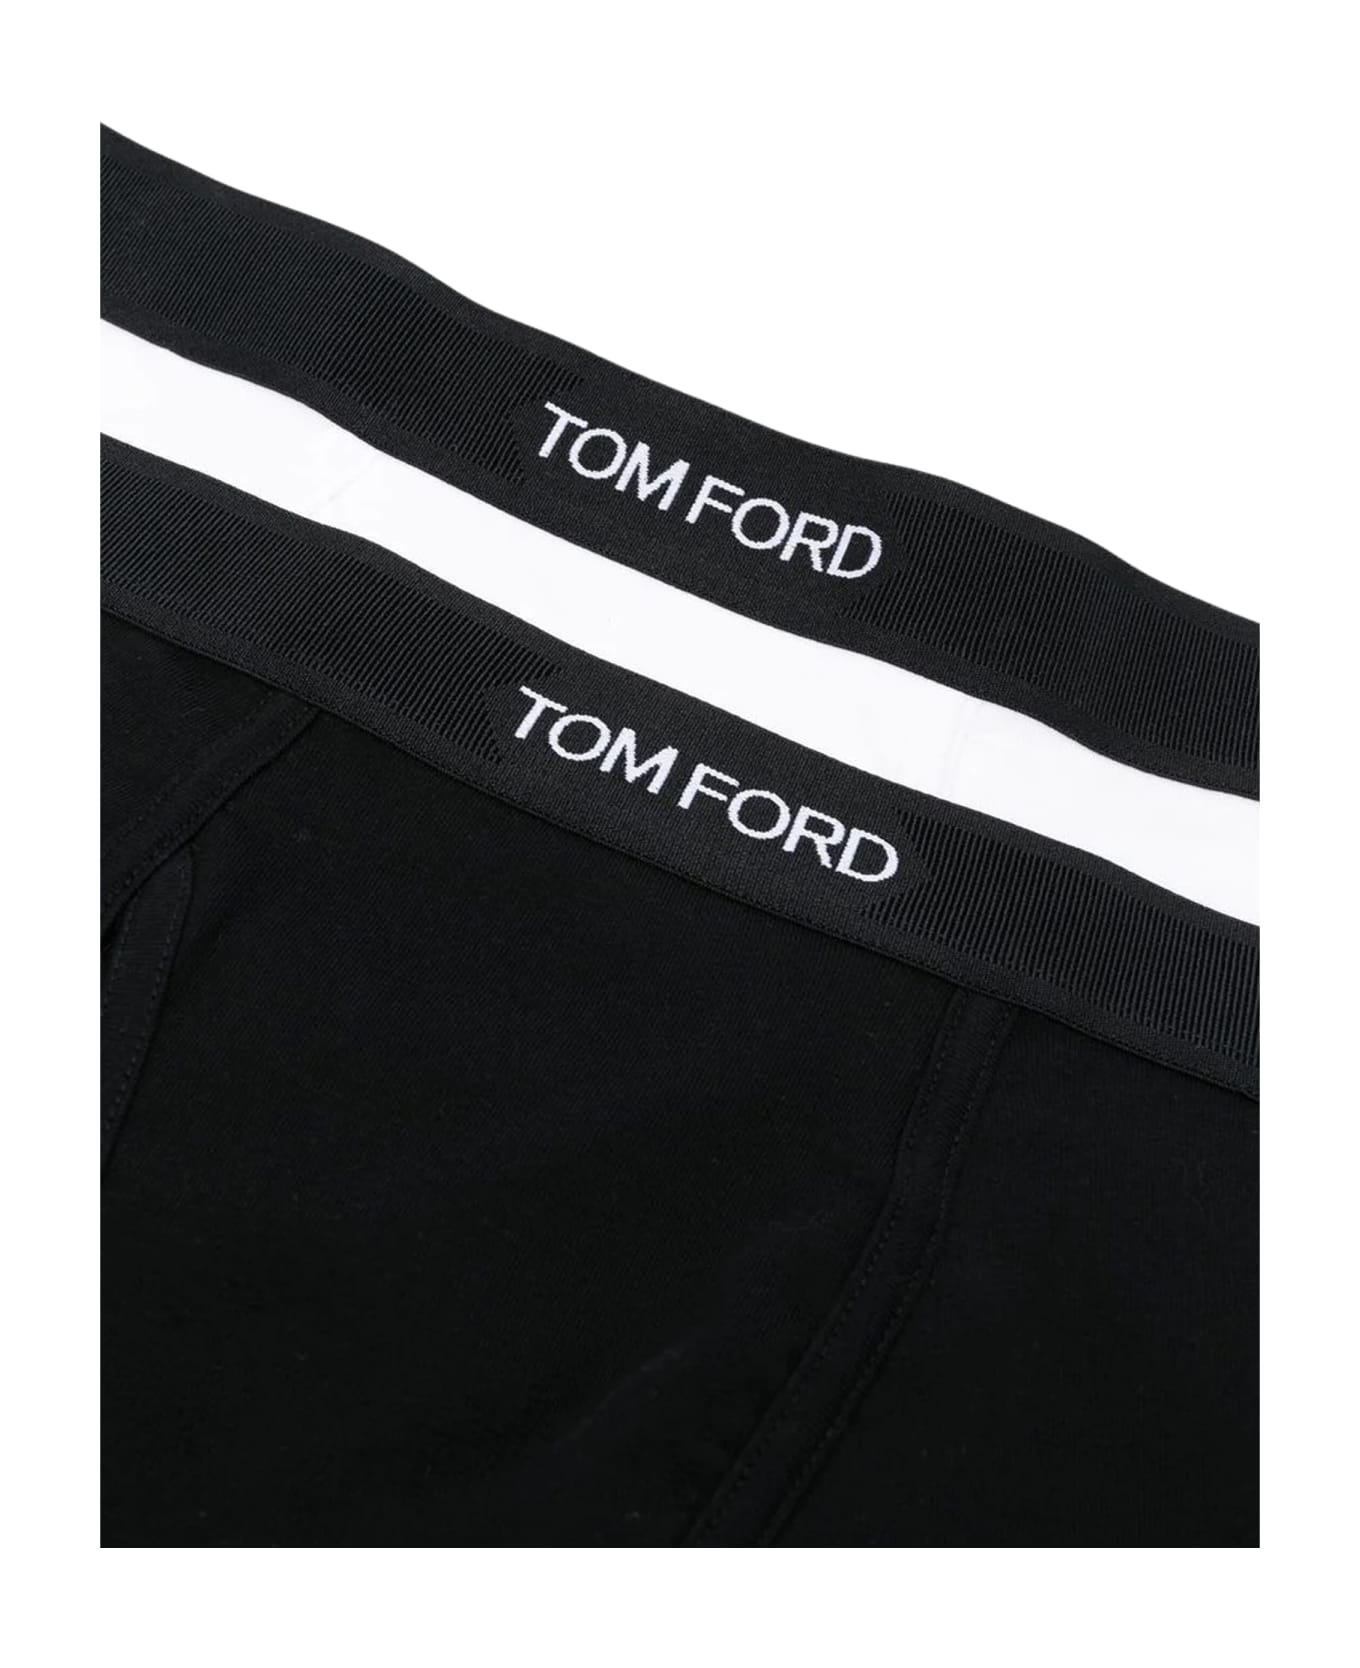 Tom Ford Bi-pack Cotton Stretch Jersey Brief - Black White